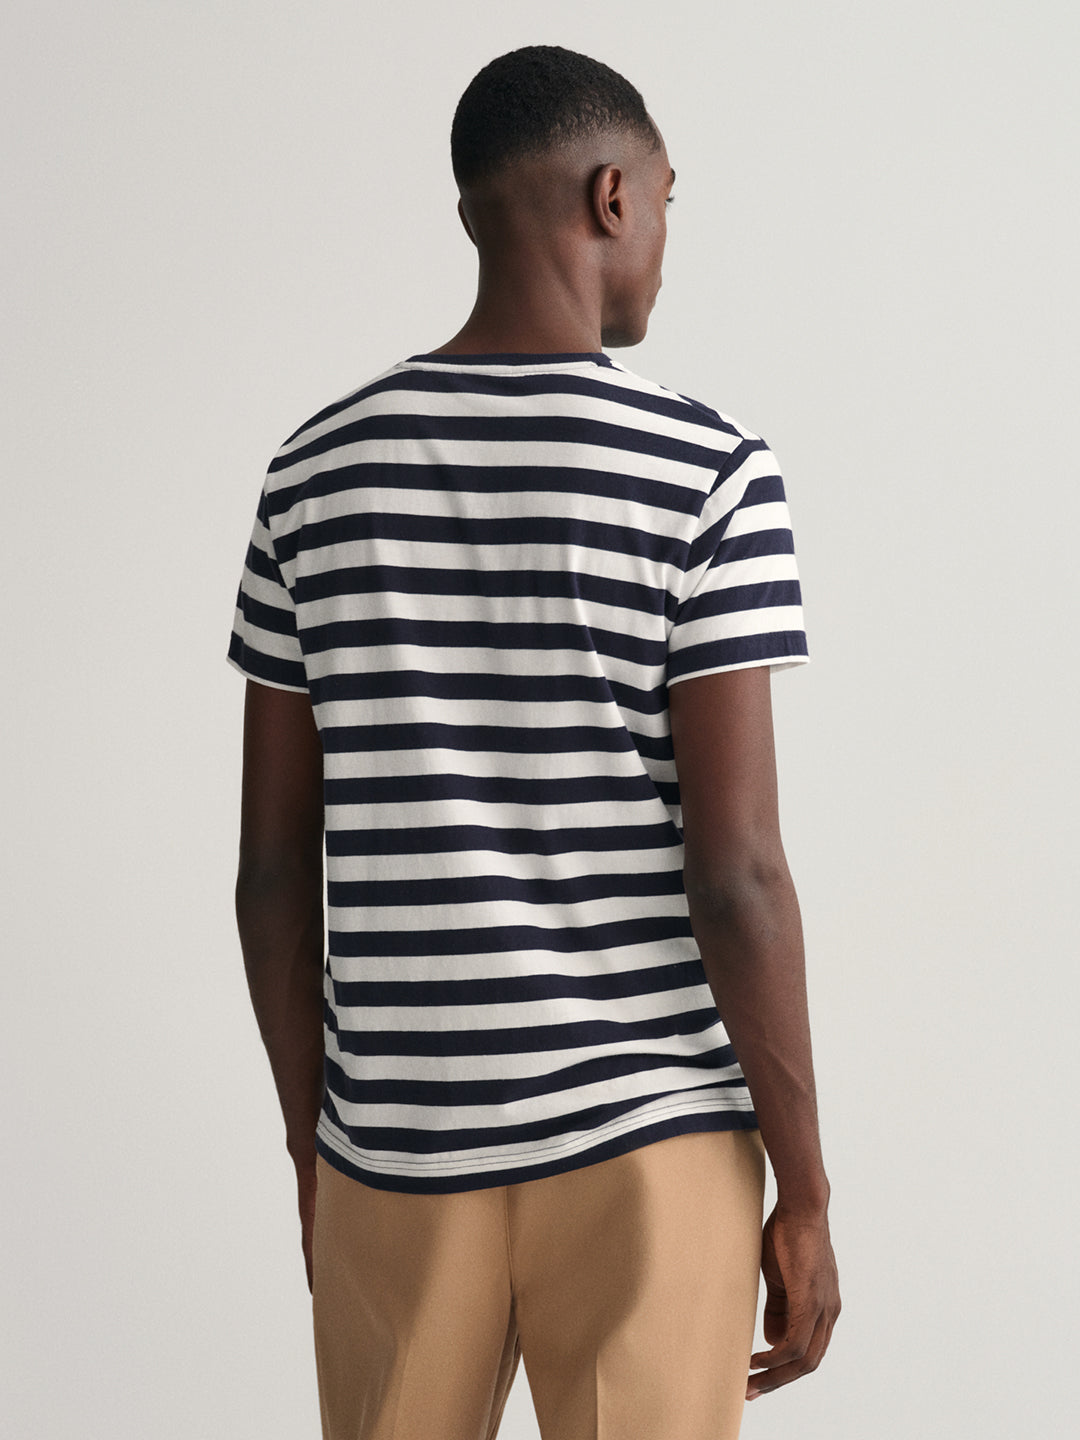 Gant Blue Striped Regular Fit T-Shirt